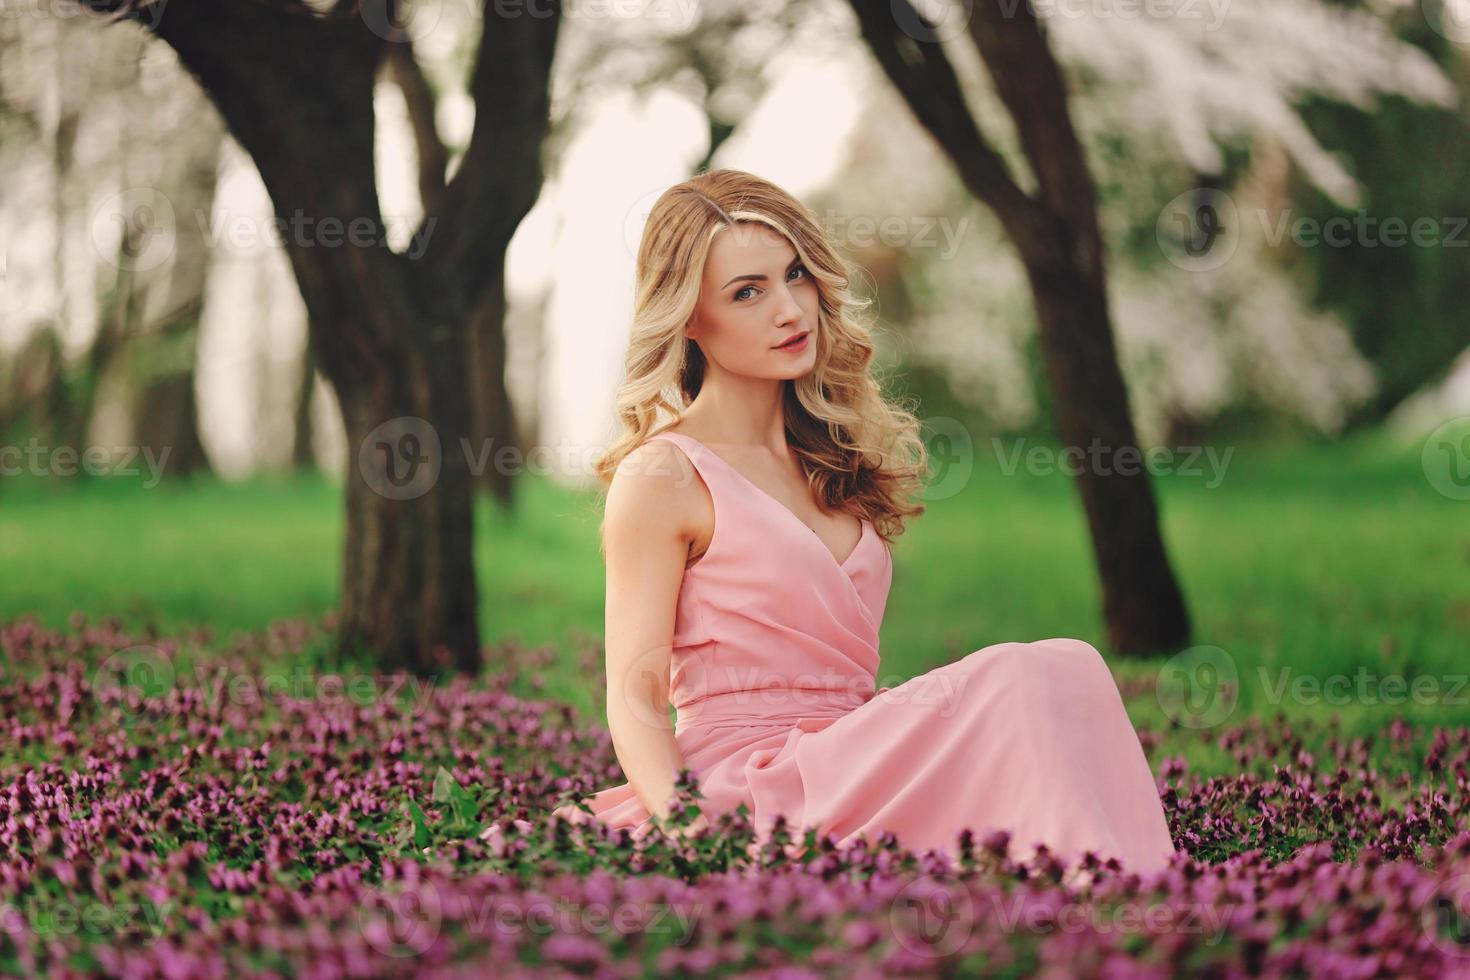 mooie blonde jonge vrouw in kleurrijke bloemen. meisje met make-up en kapsel in roze jurk in bloeiende lente park. Vrouwendag foto